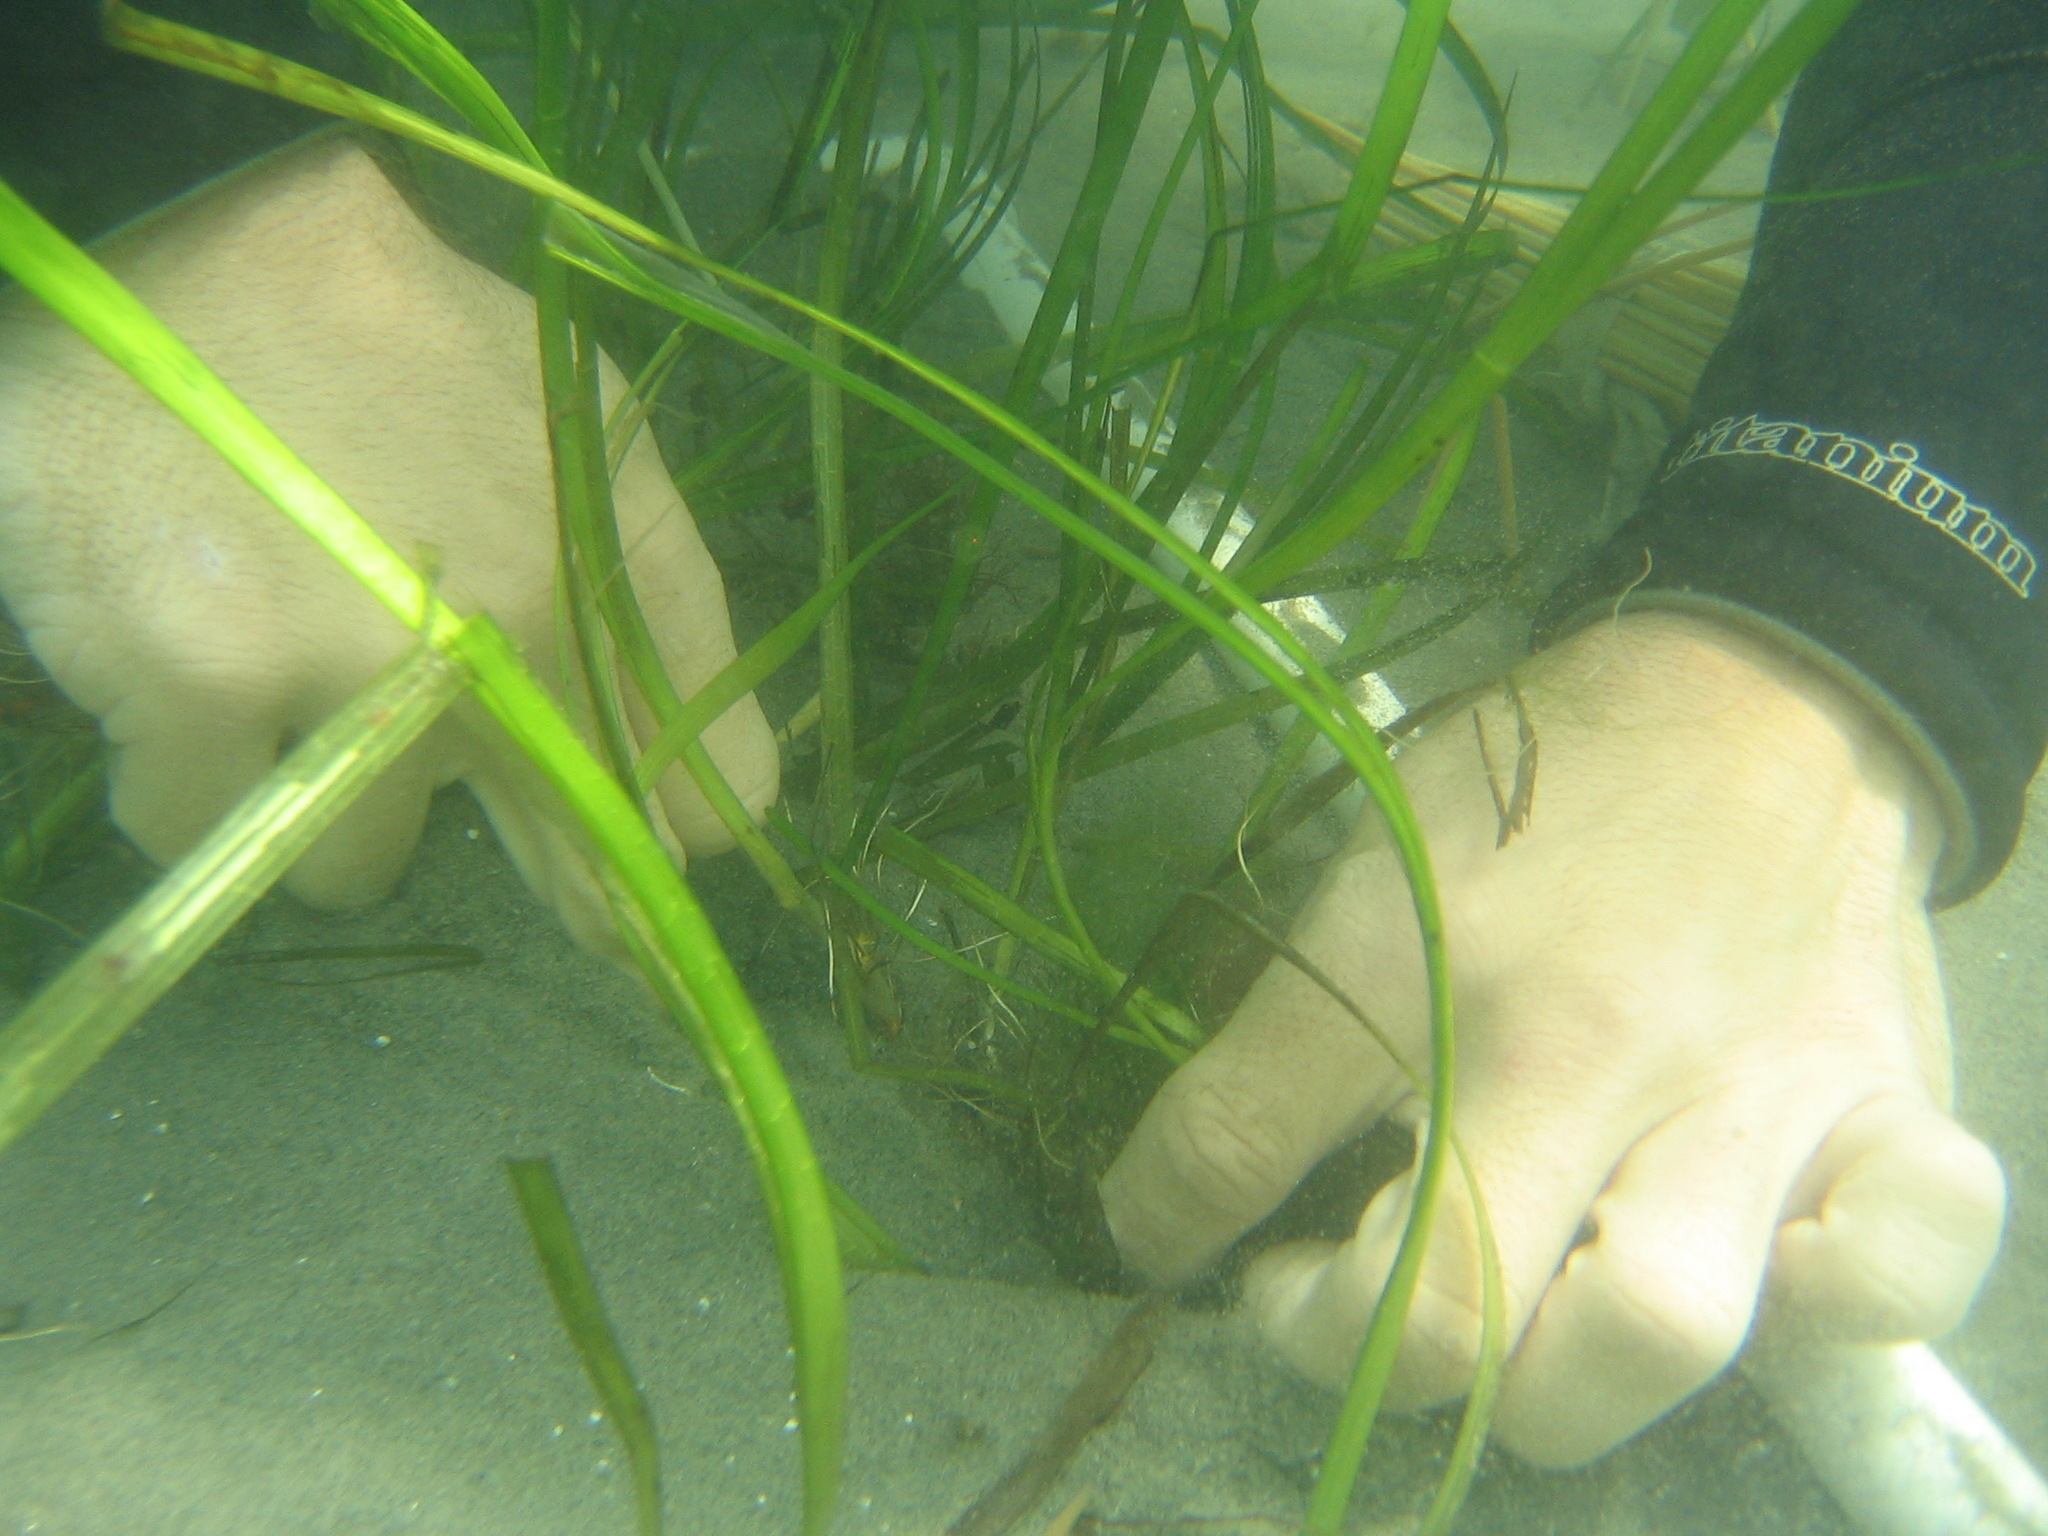 Underwater picture of scuba diver planting eelgrass